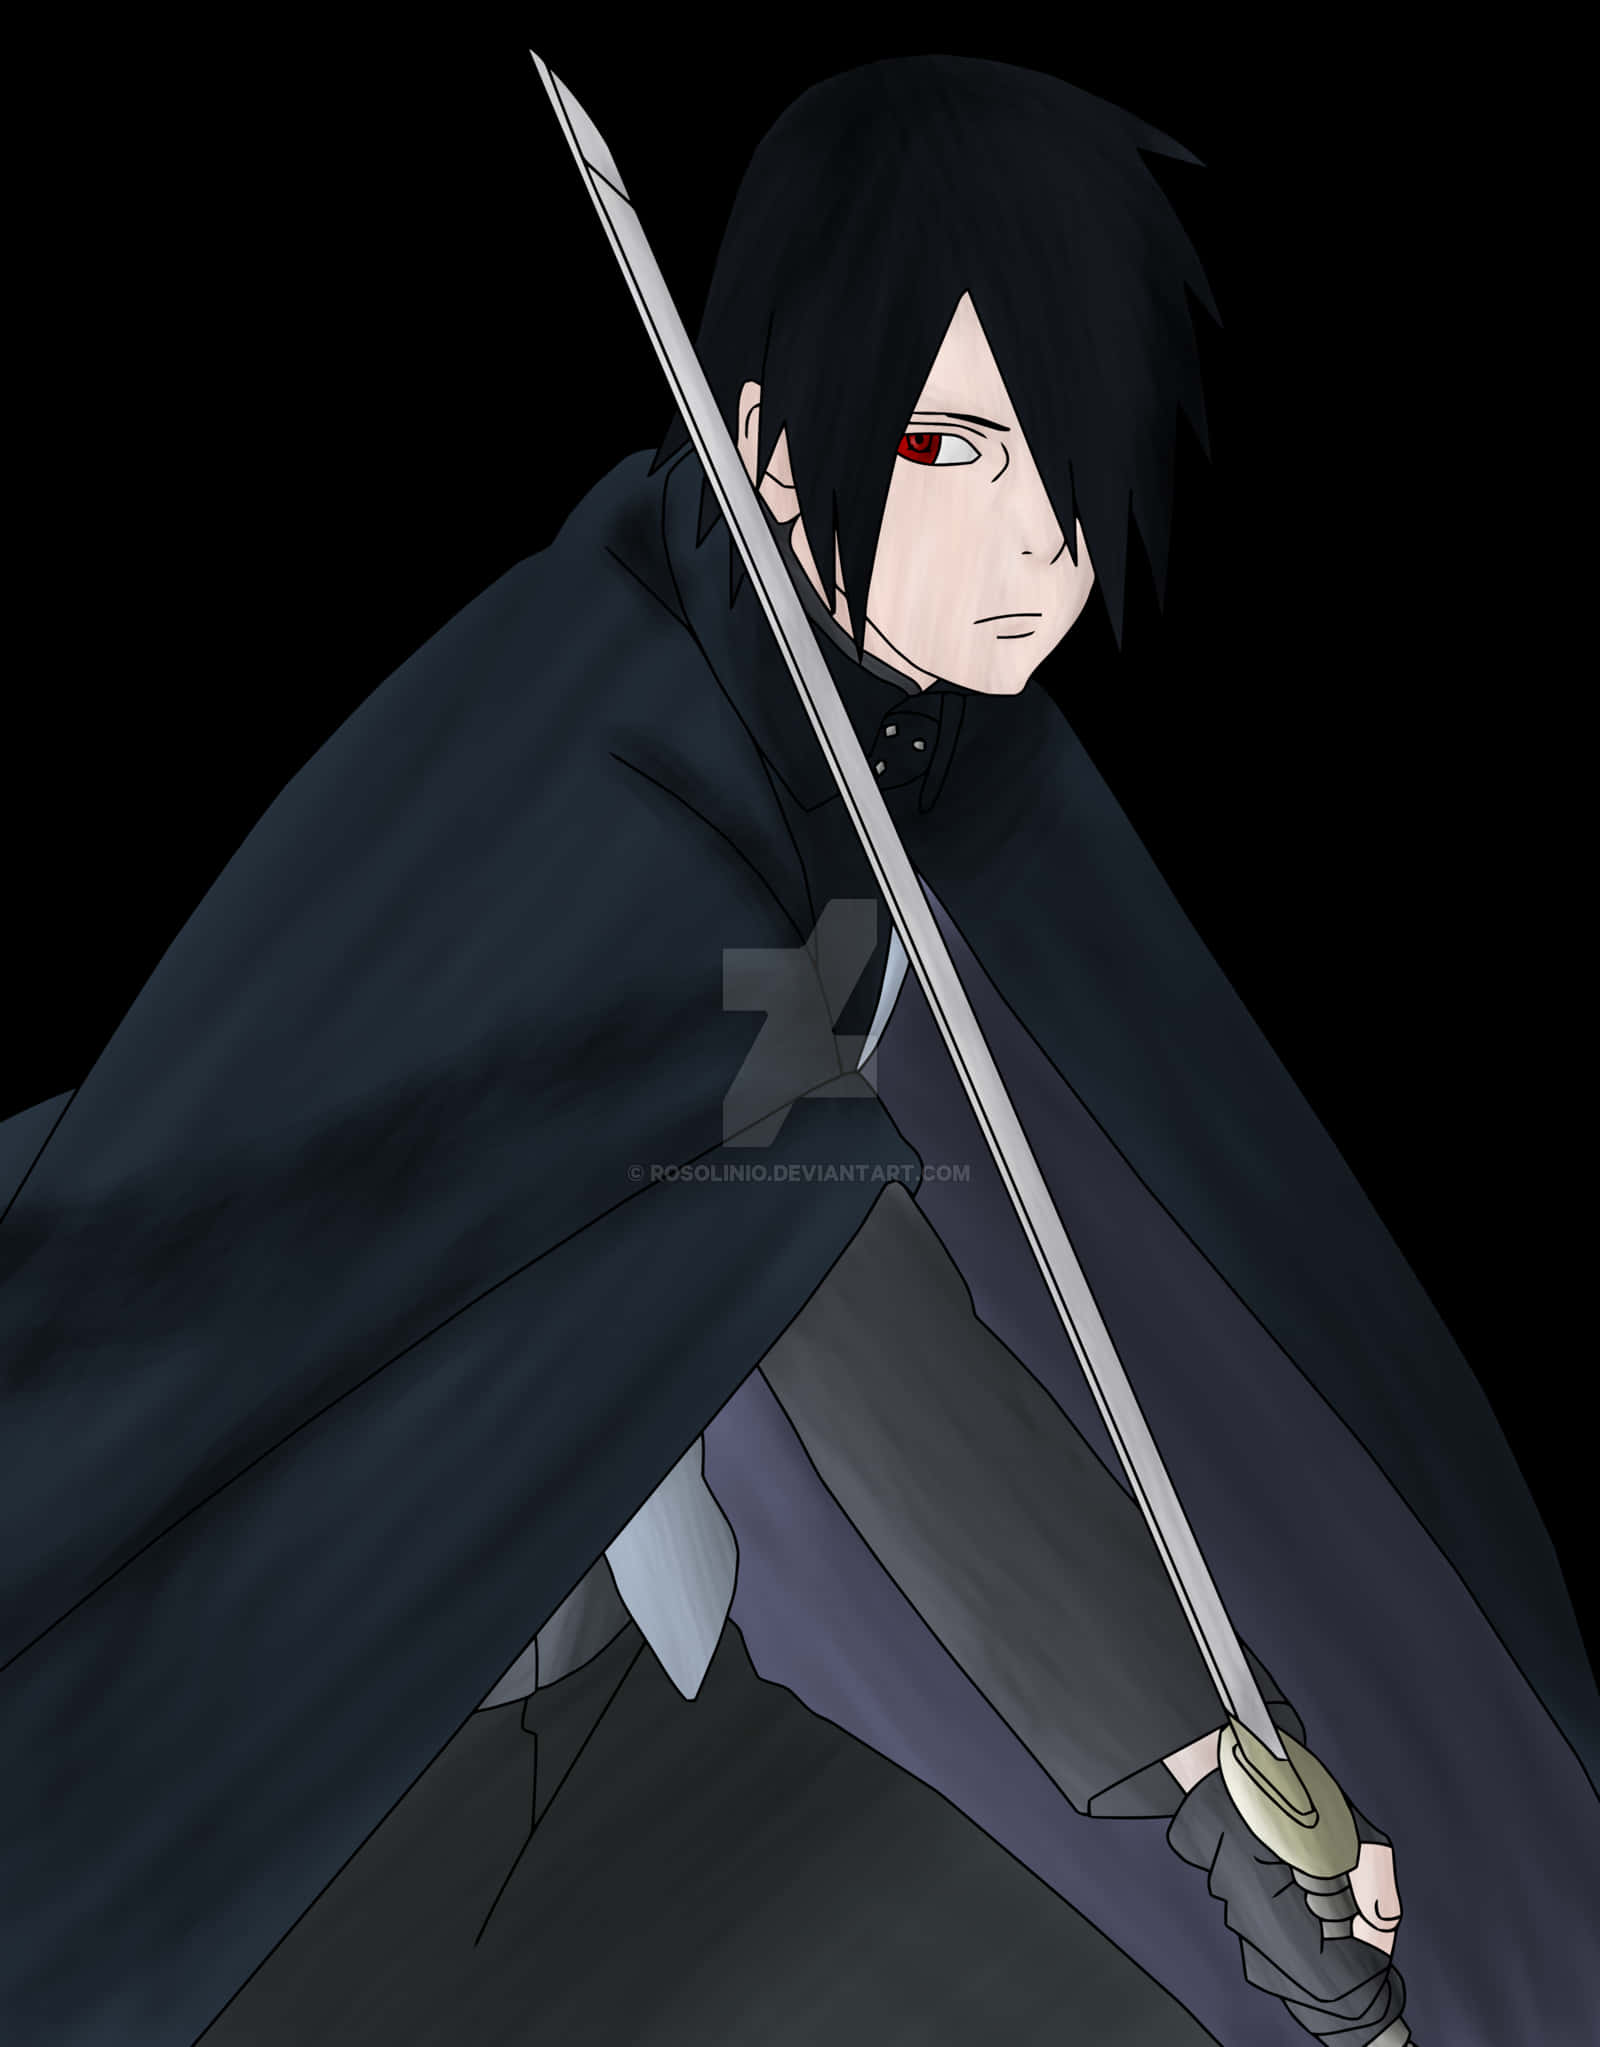 Sasuke With Black Cape And Sword